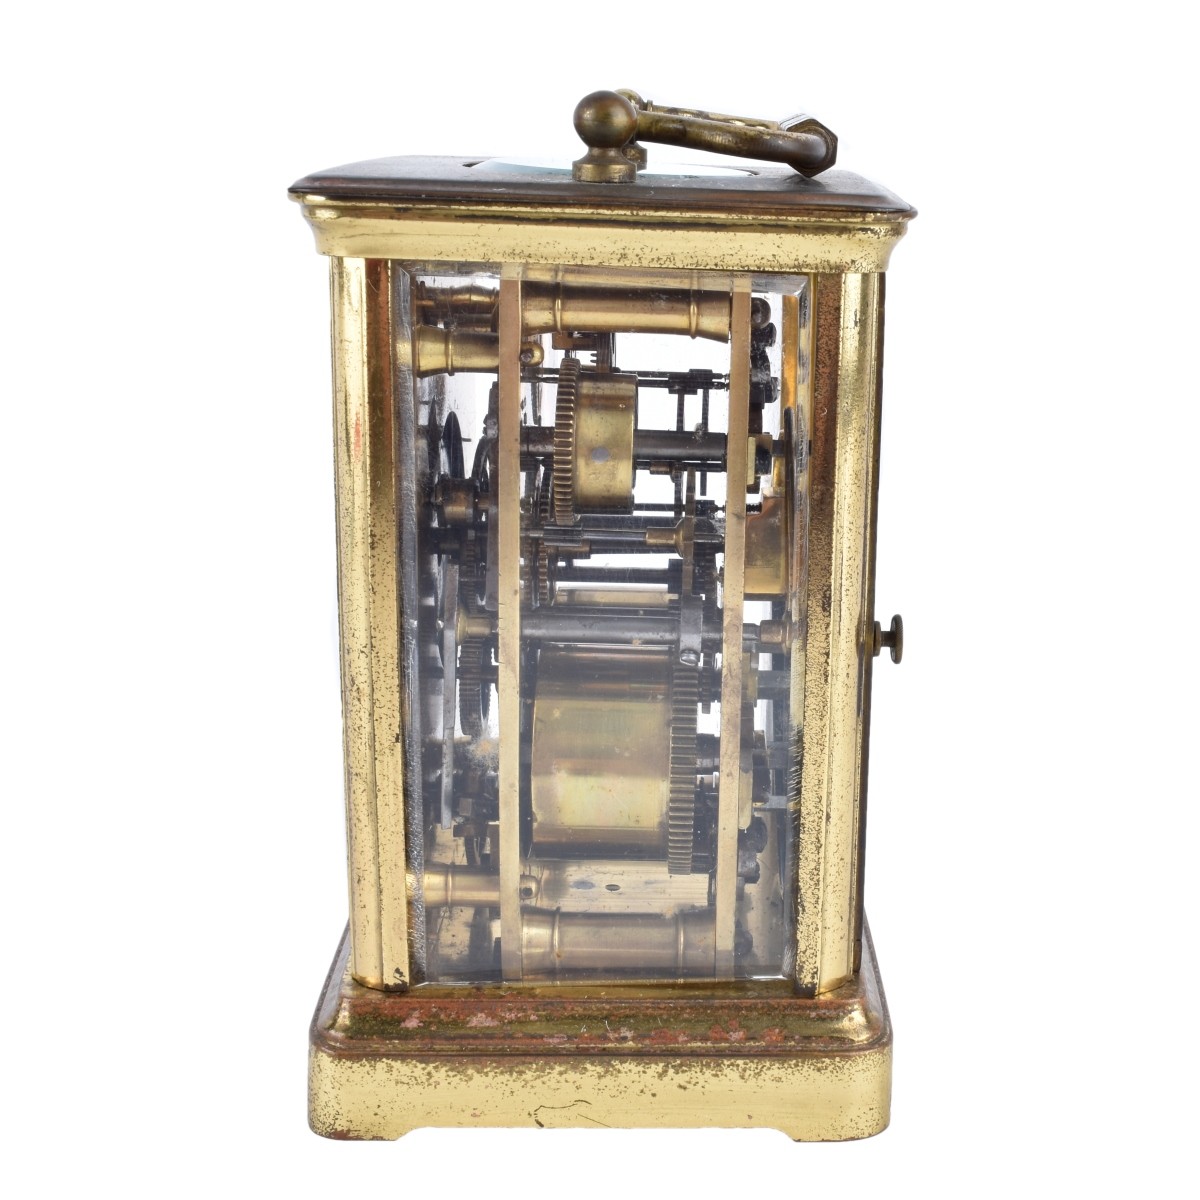 Antique Brass Carriage Clock